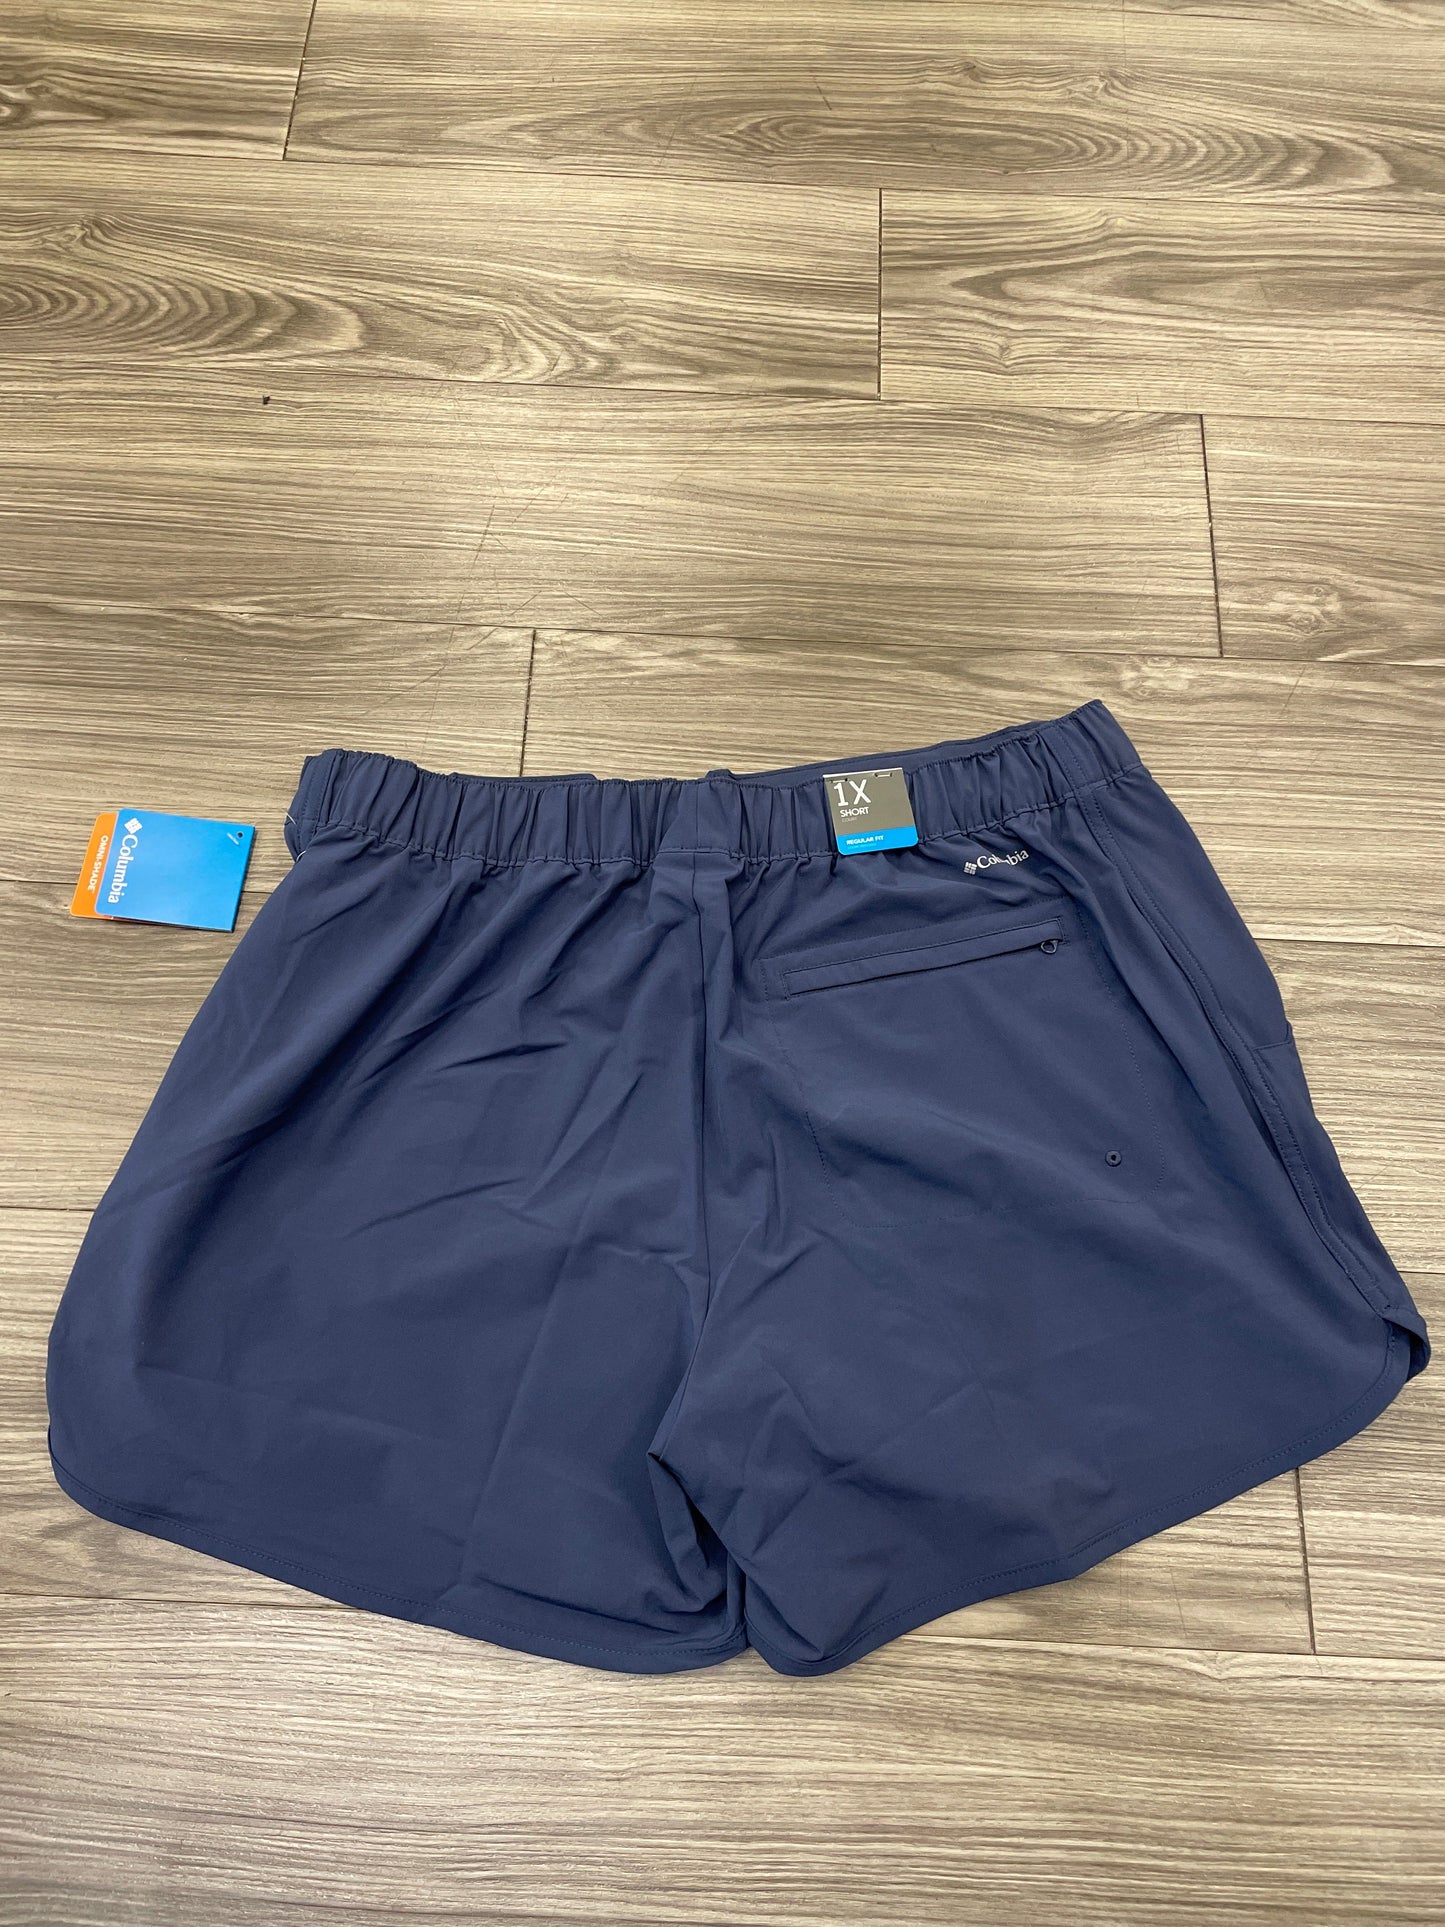 Blue Athletic Shorts Columbia, Size 1x